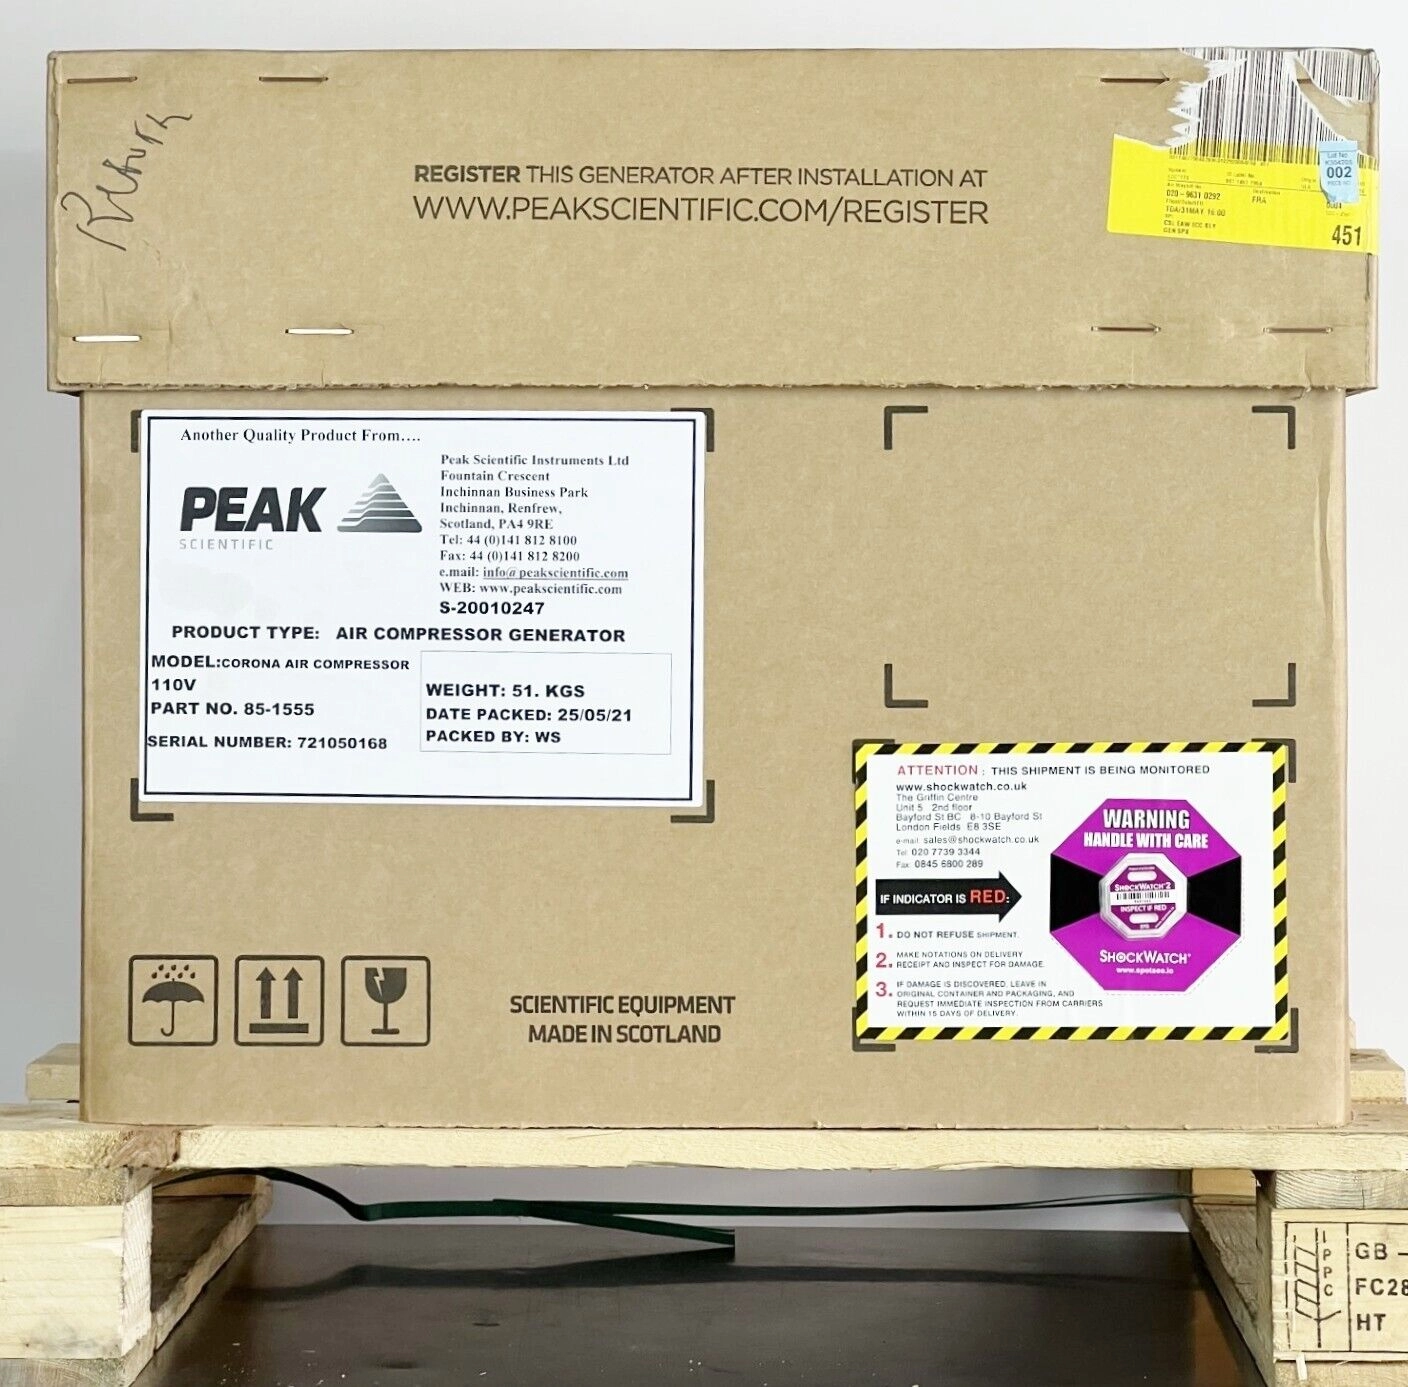 Peak Scientific Corona Air Compressor 85-1555 (Bra